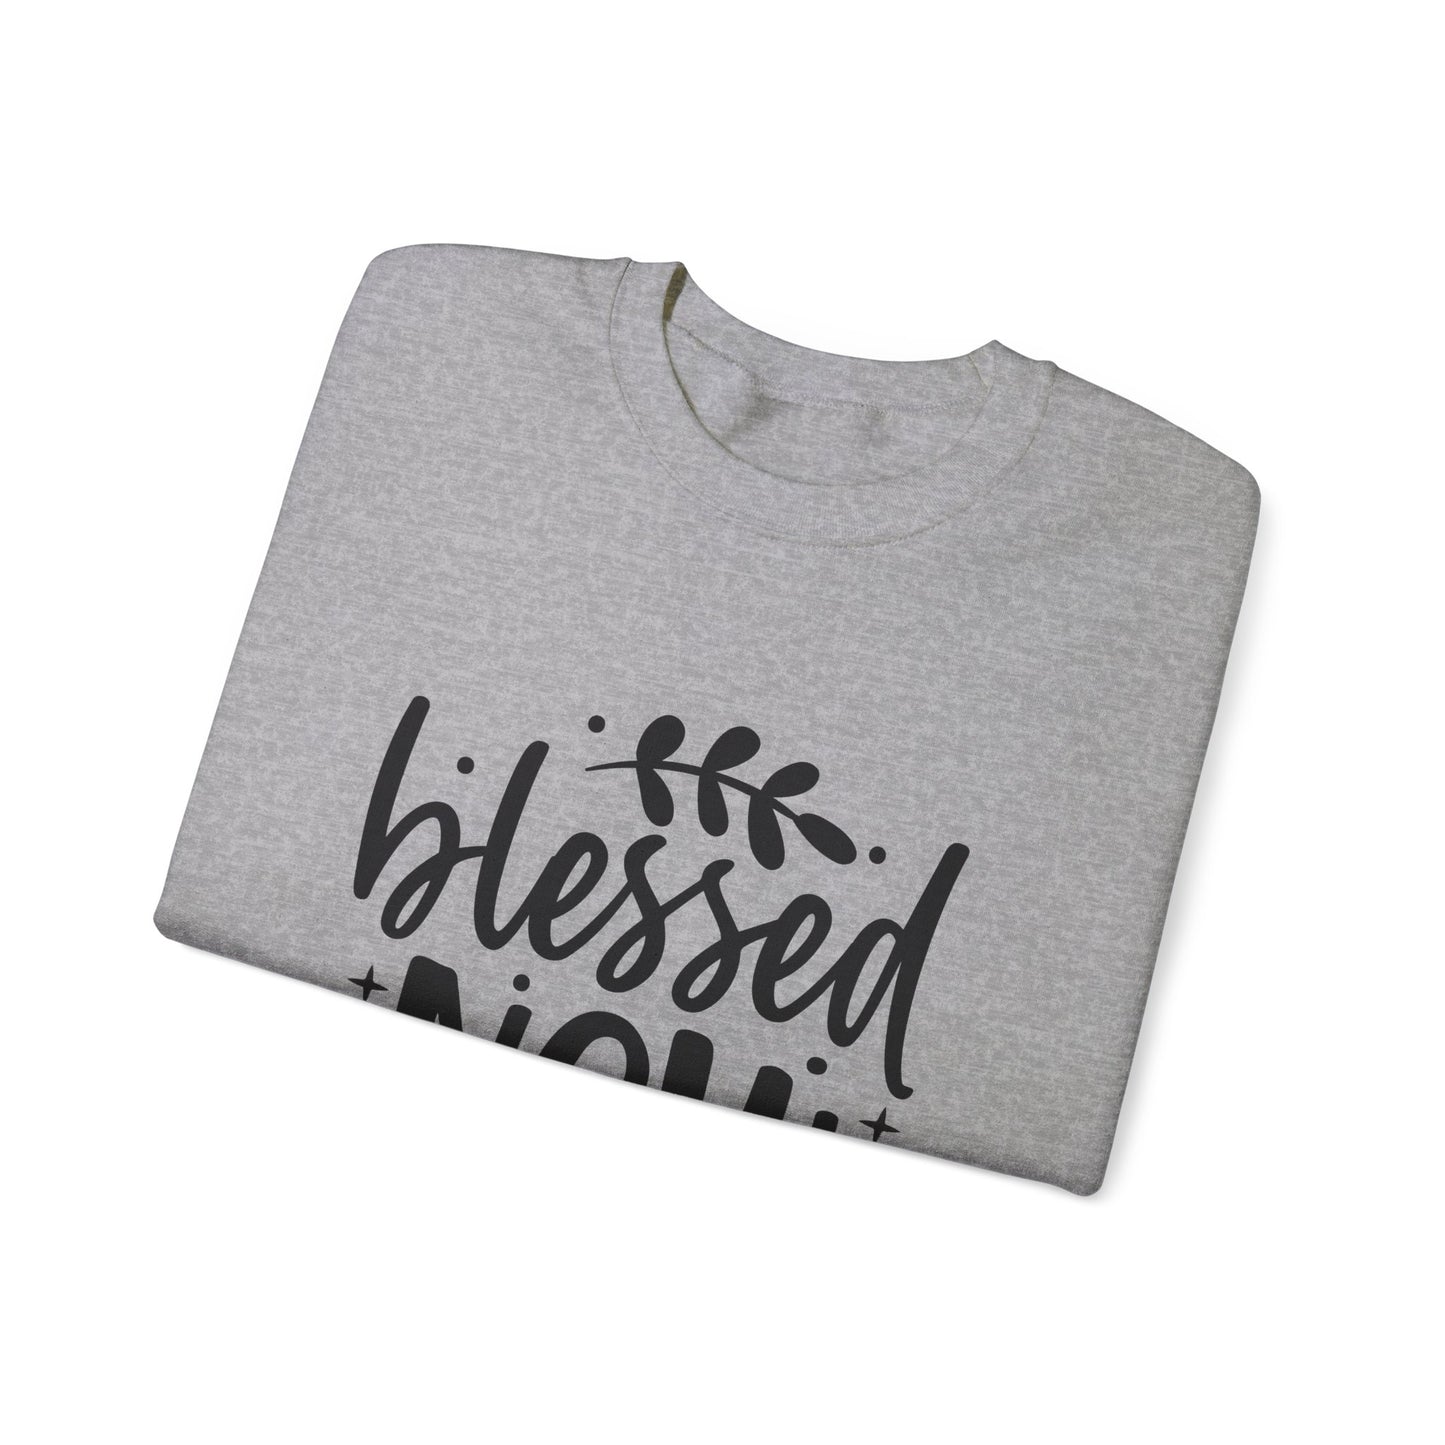 Blessed New Year Unisex Heavy Blend™ Crewneck Sweatshirt